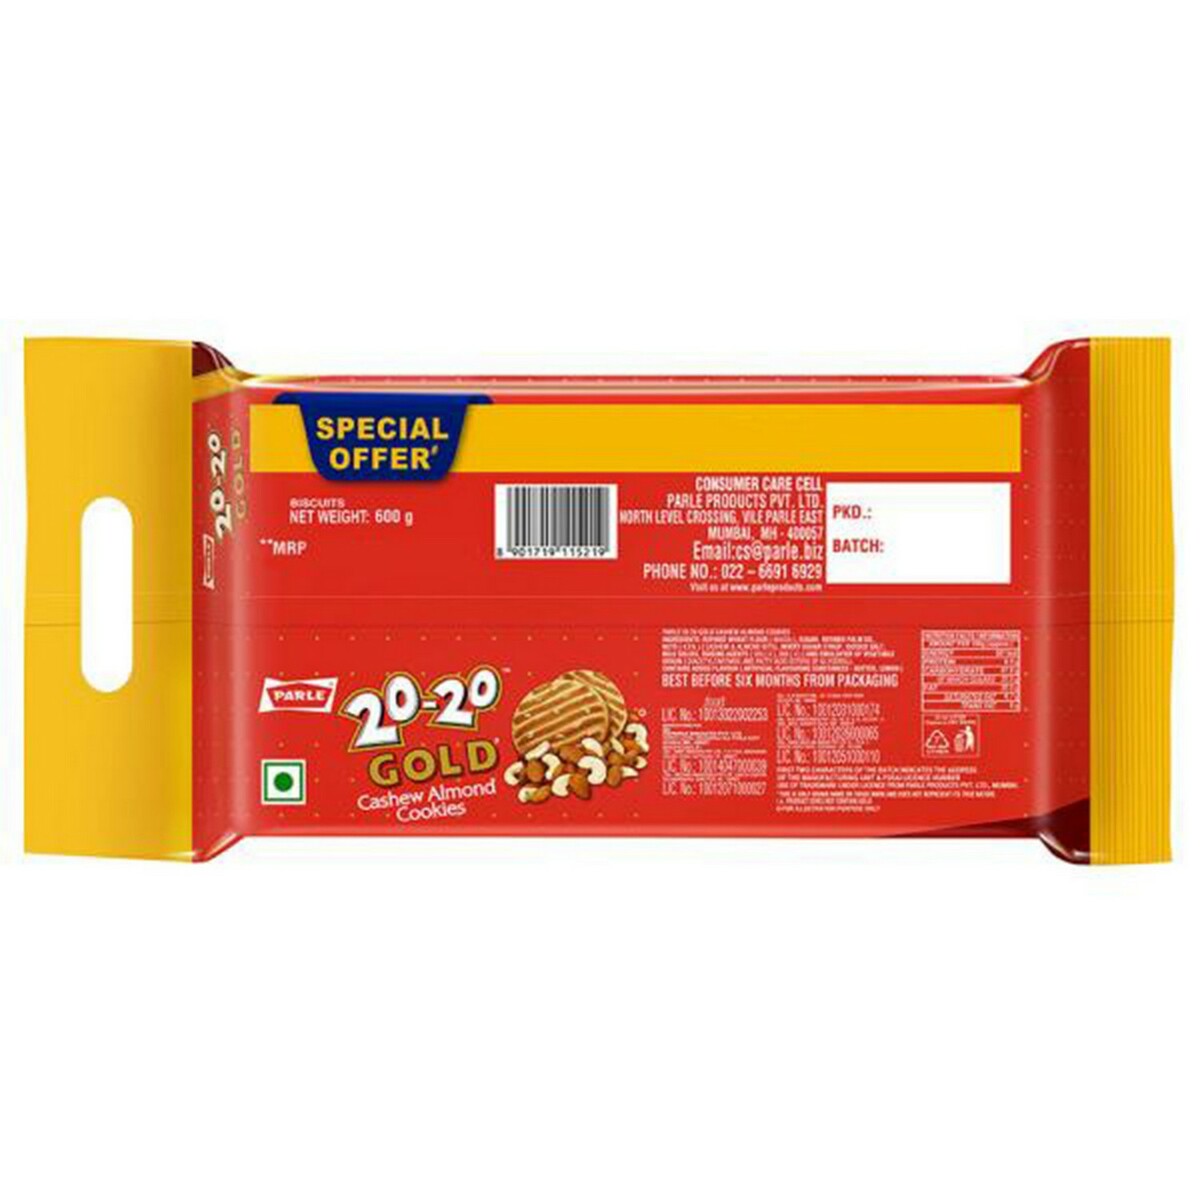 Parle 20-20 Gold Cashew Almond 600gm